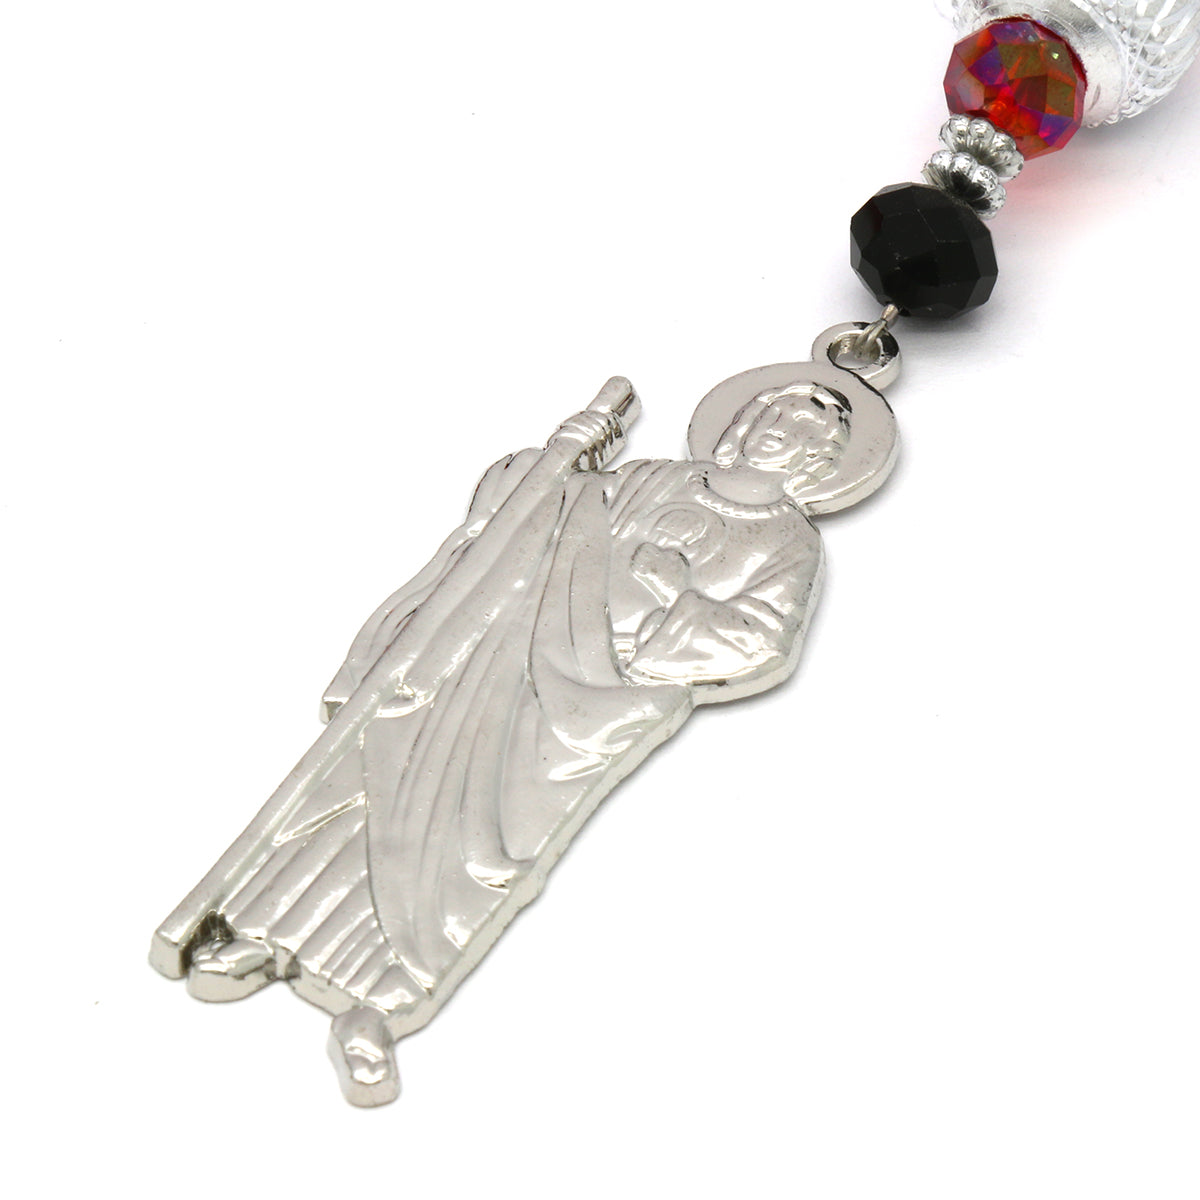 8MM Black/Red Crystal Rosary With SanJudas Pendant